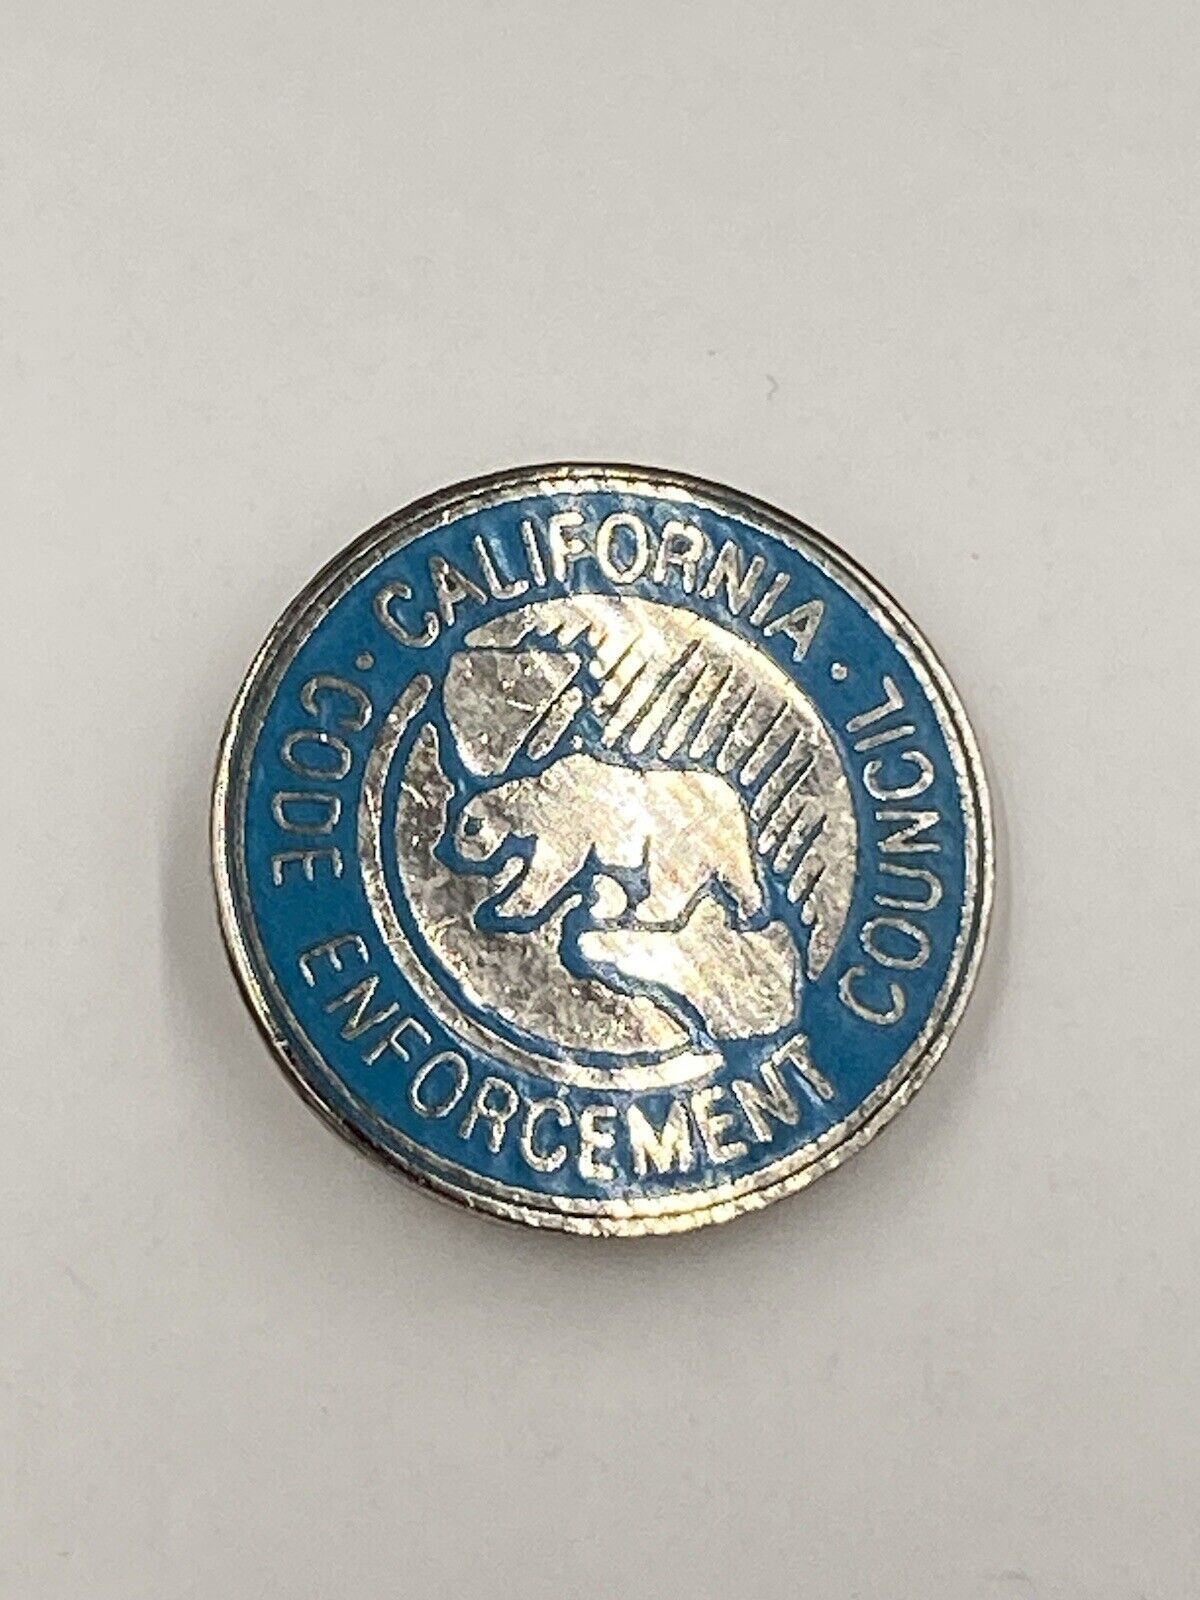 California Code Enforcement Council Lapel Pin